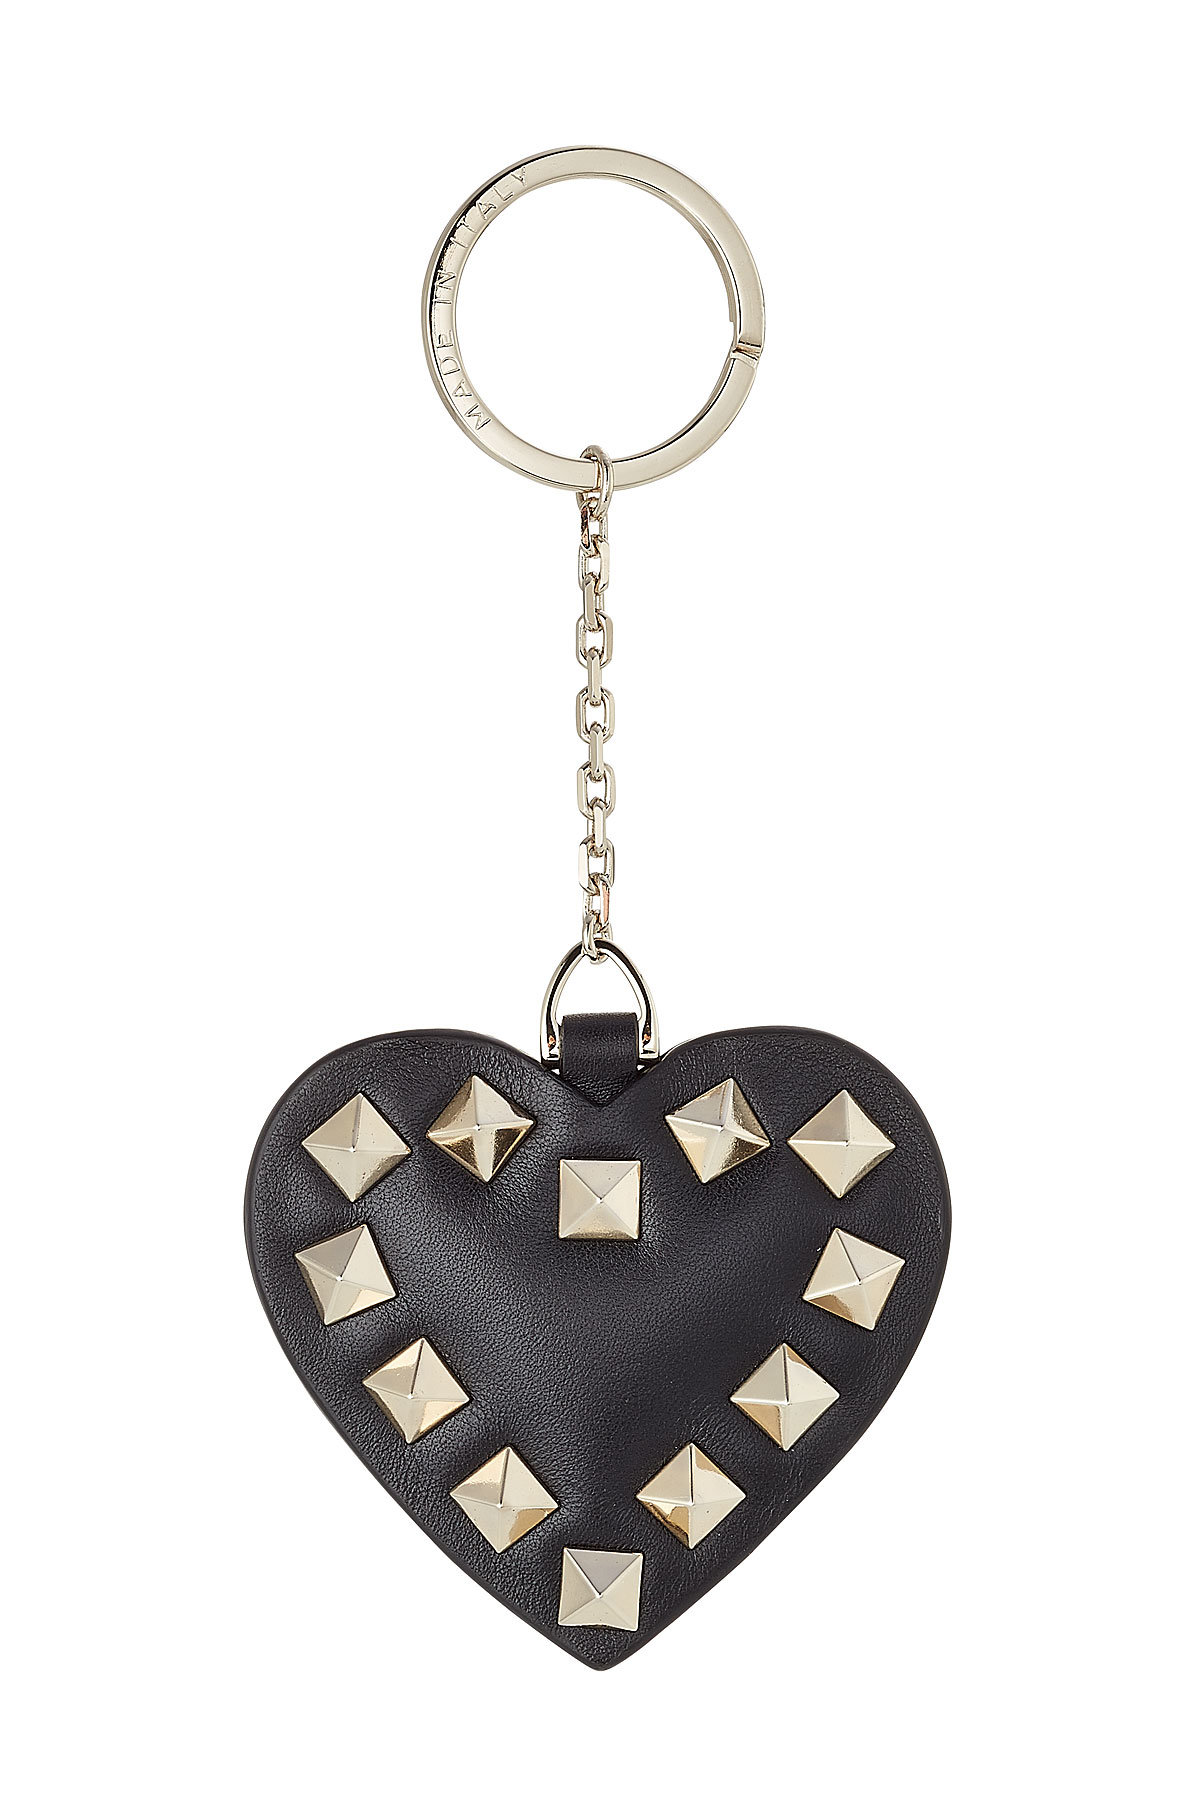 Valentino - Rockstud Heart Leather Keychain